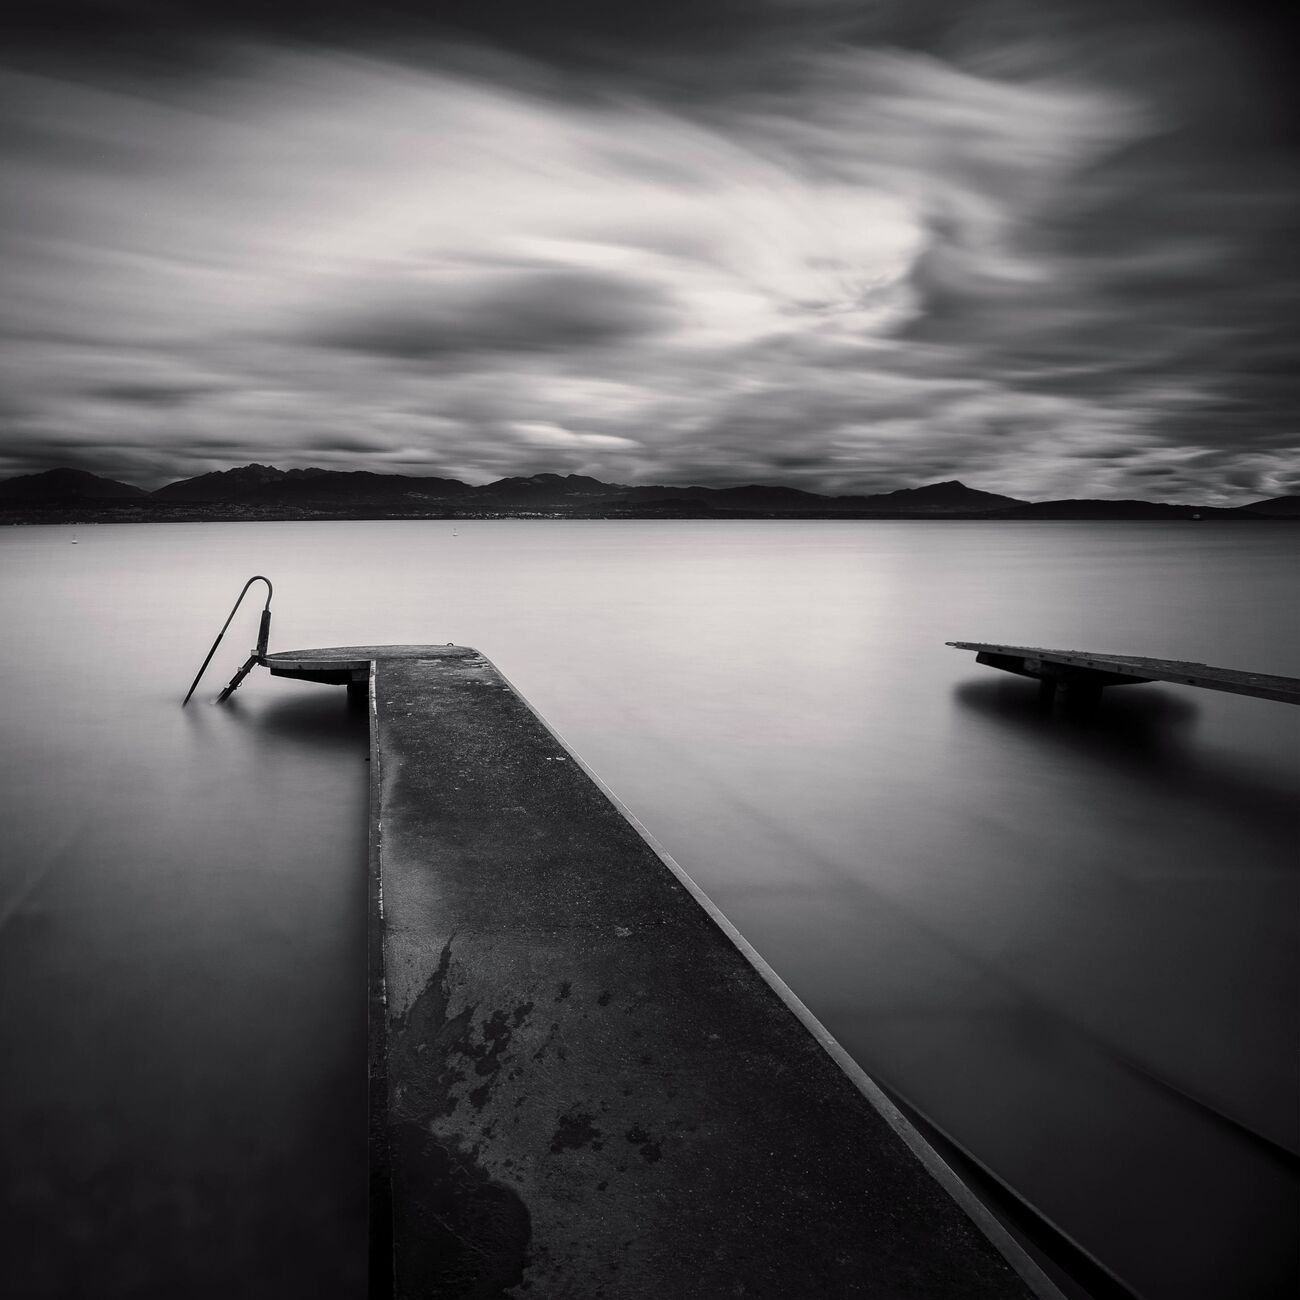 Piers, Etude 1, Lake Geneva, Switzerland. August 2014. Ref-11443 - Denis Olivier Photography